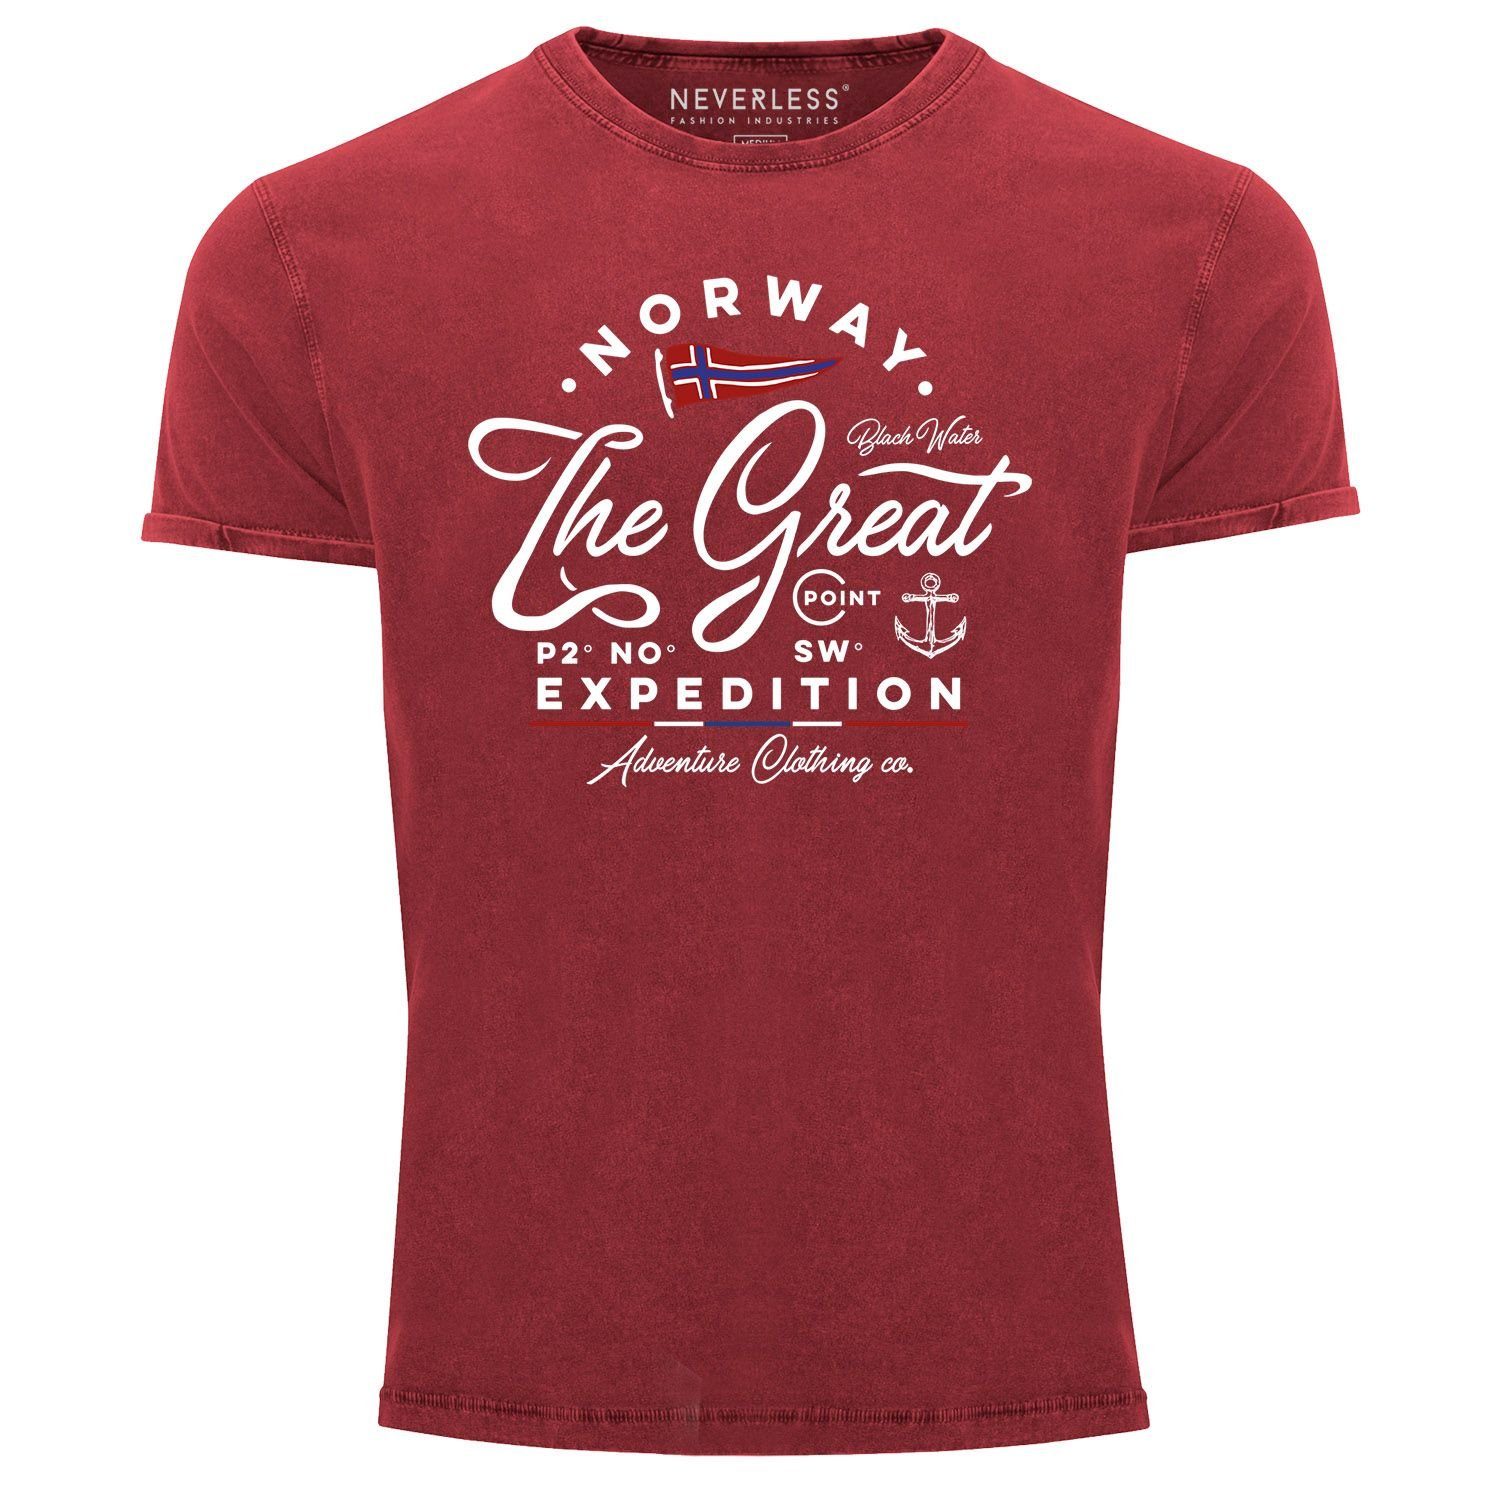 Neverless Print-Shirt Vintage Print mit Printshirt Look Herren Great Neverless® rot T-Shirt Norwegen Used The Aufdruck Outdoor Expedition Adventure Shirt